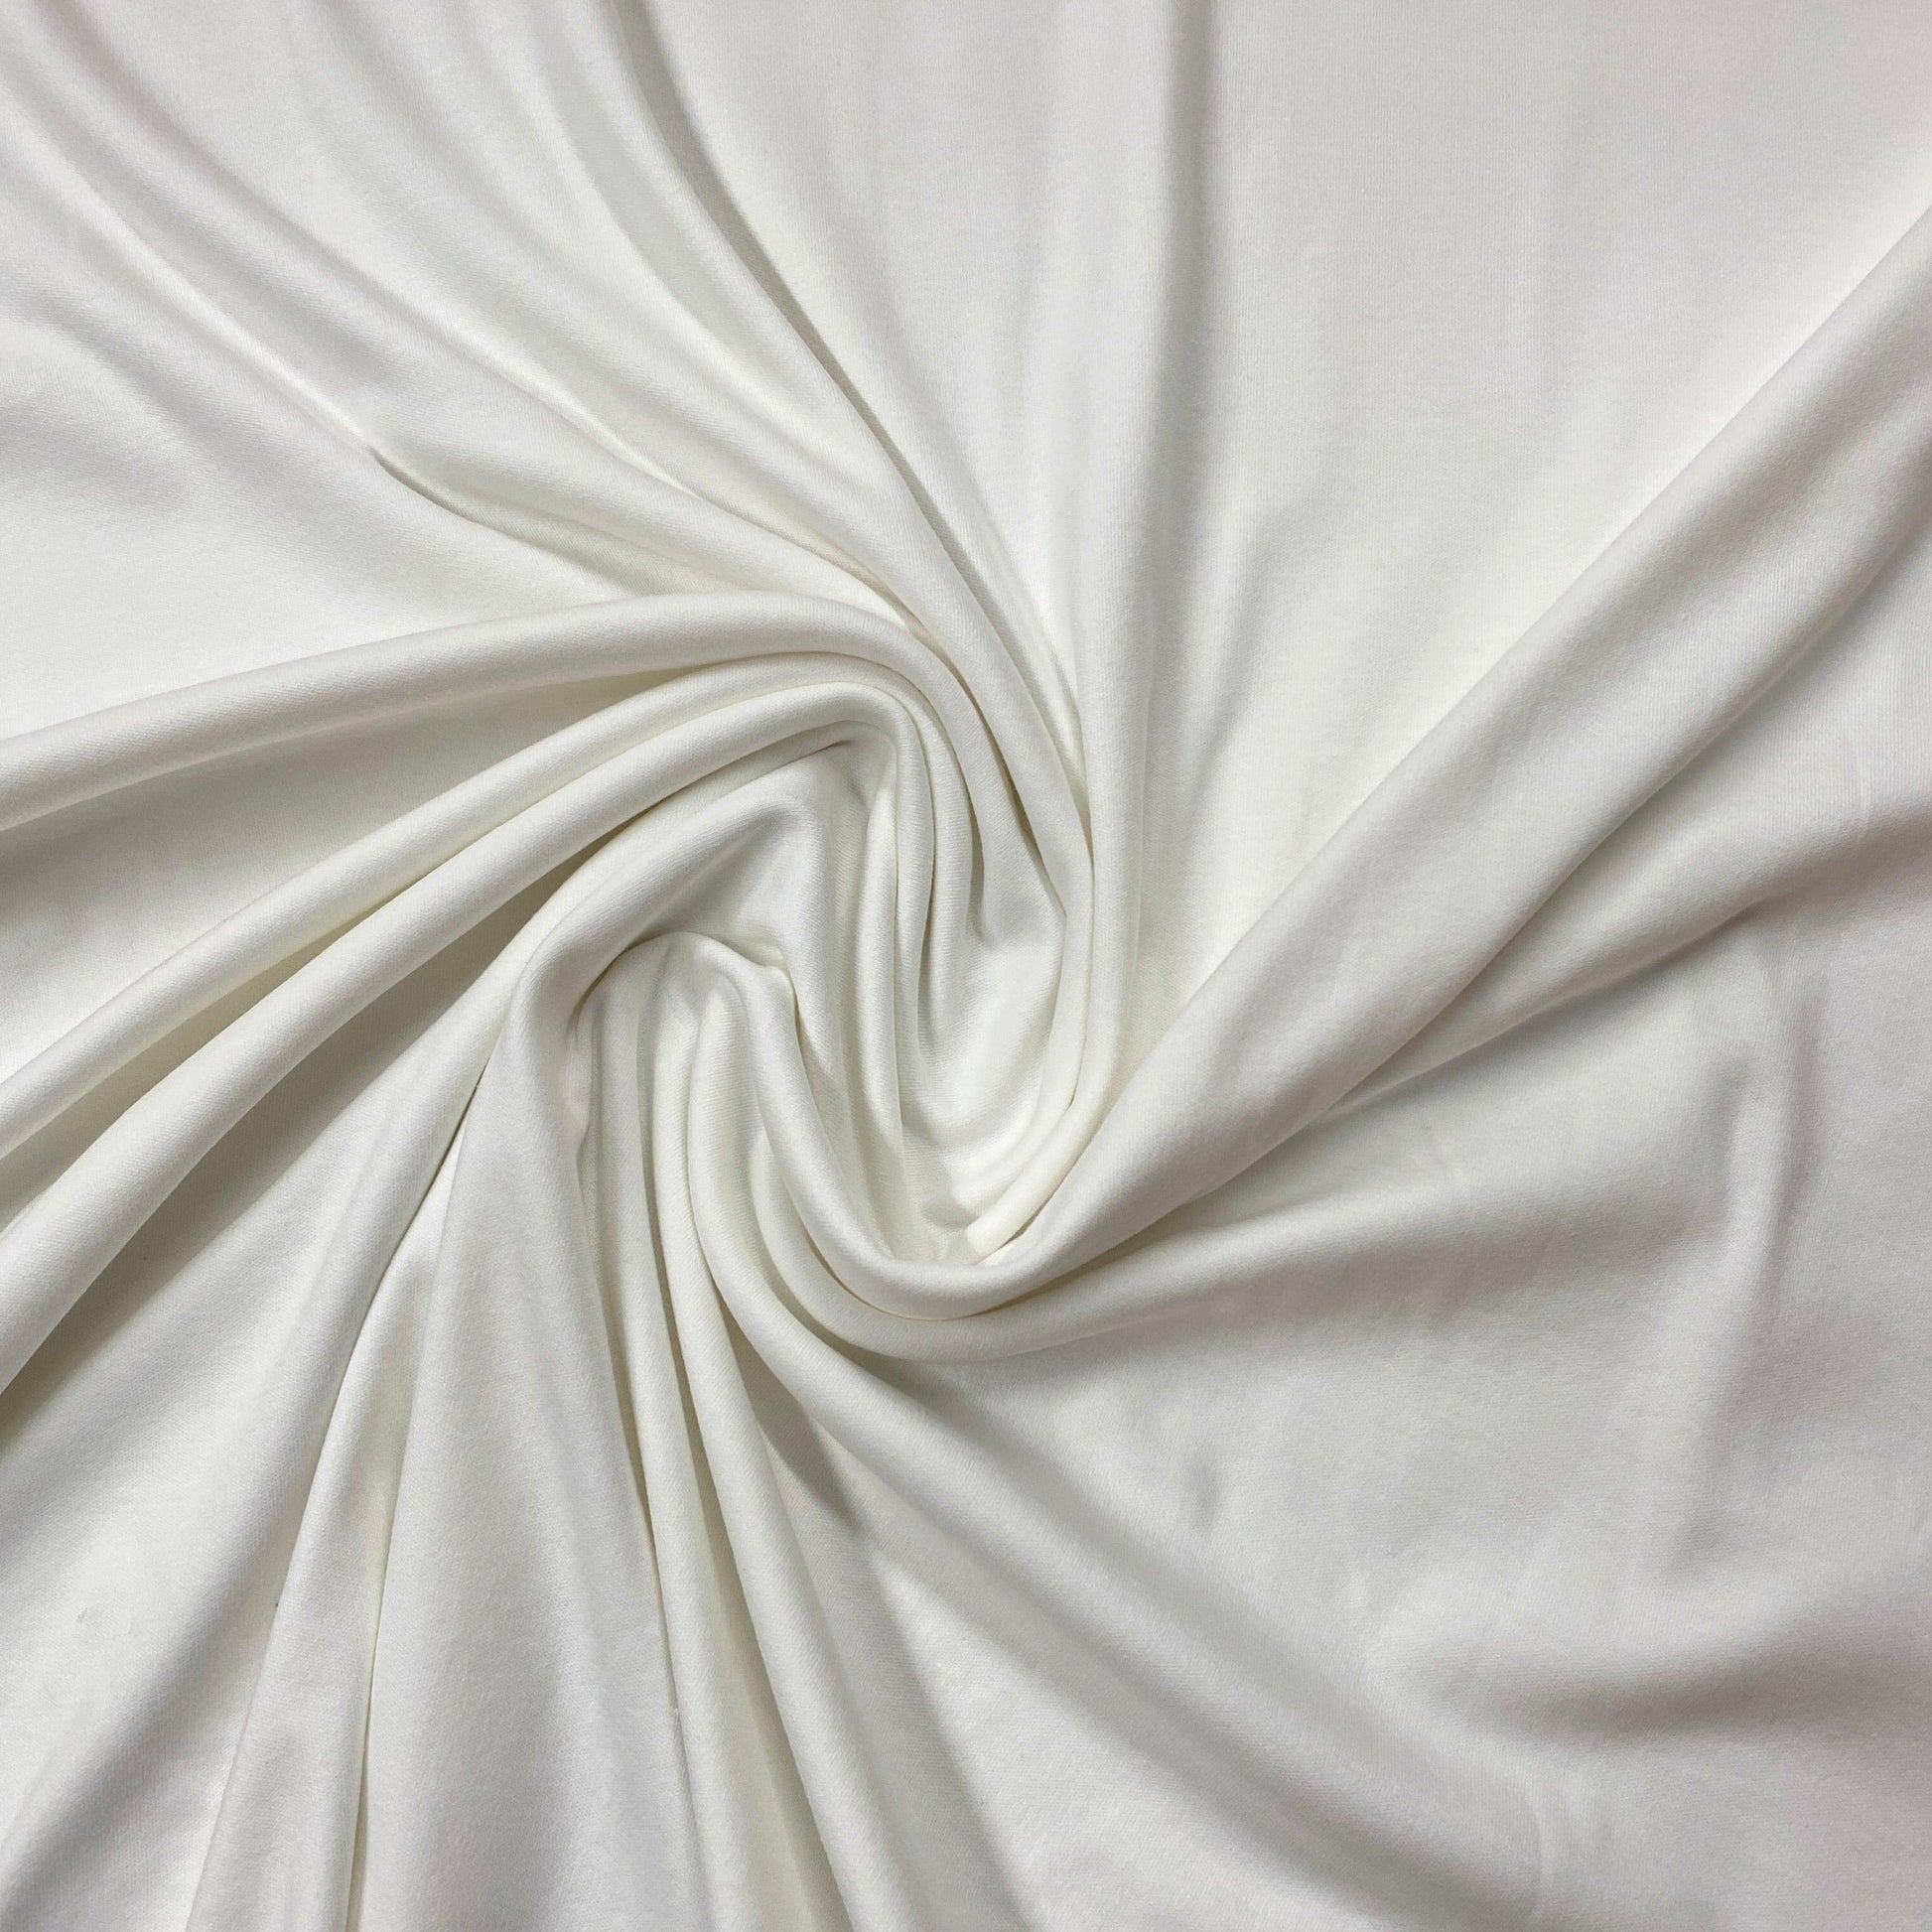 Off-White Cotton Interlock Fabric - Nature's Fabrics